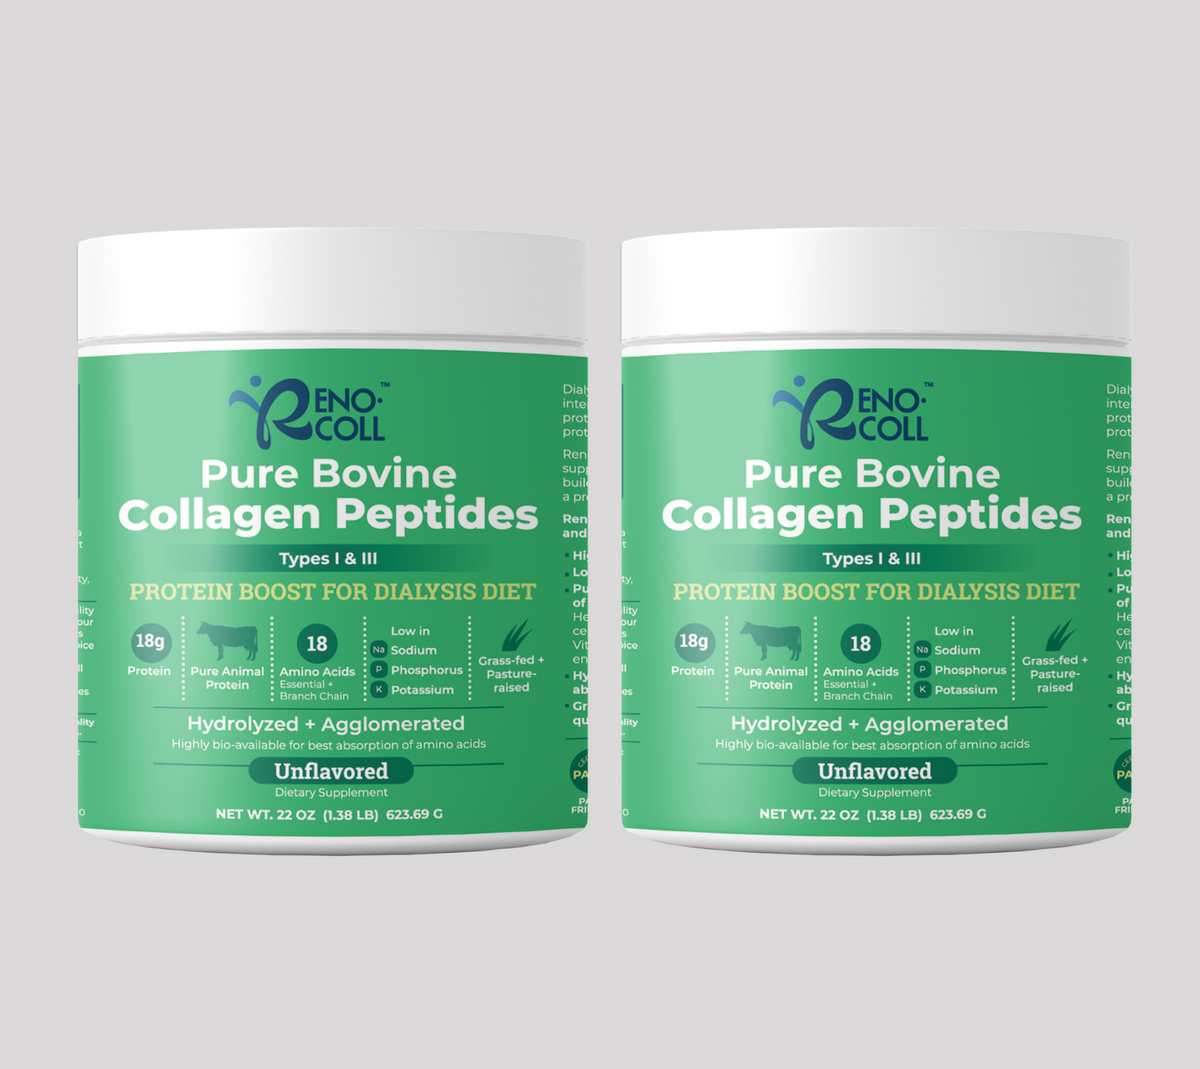 Reno-Coll® Pure Bovine Collagen Peptides - A Protein Boost Supporting the Peritoneal Kidney Dialysis Diet, 22 oz